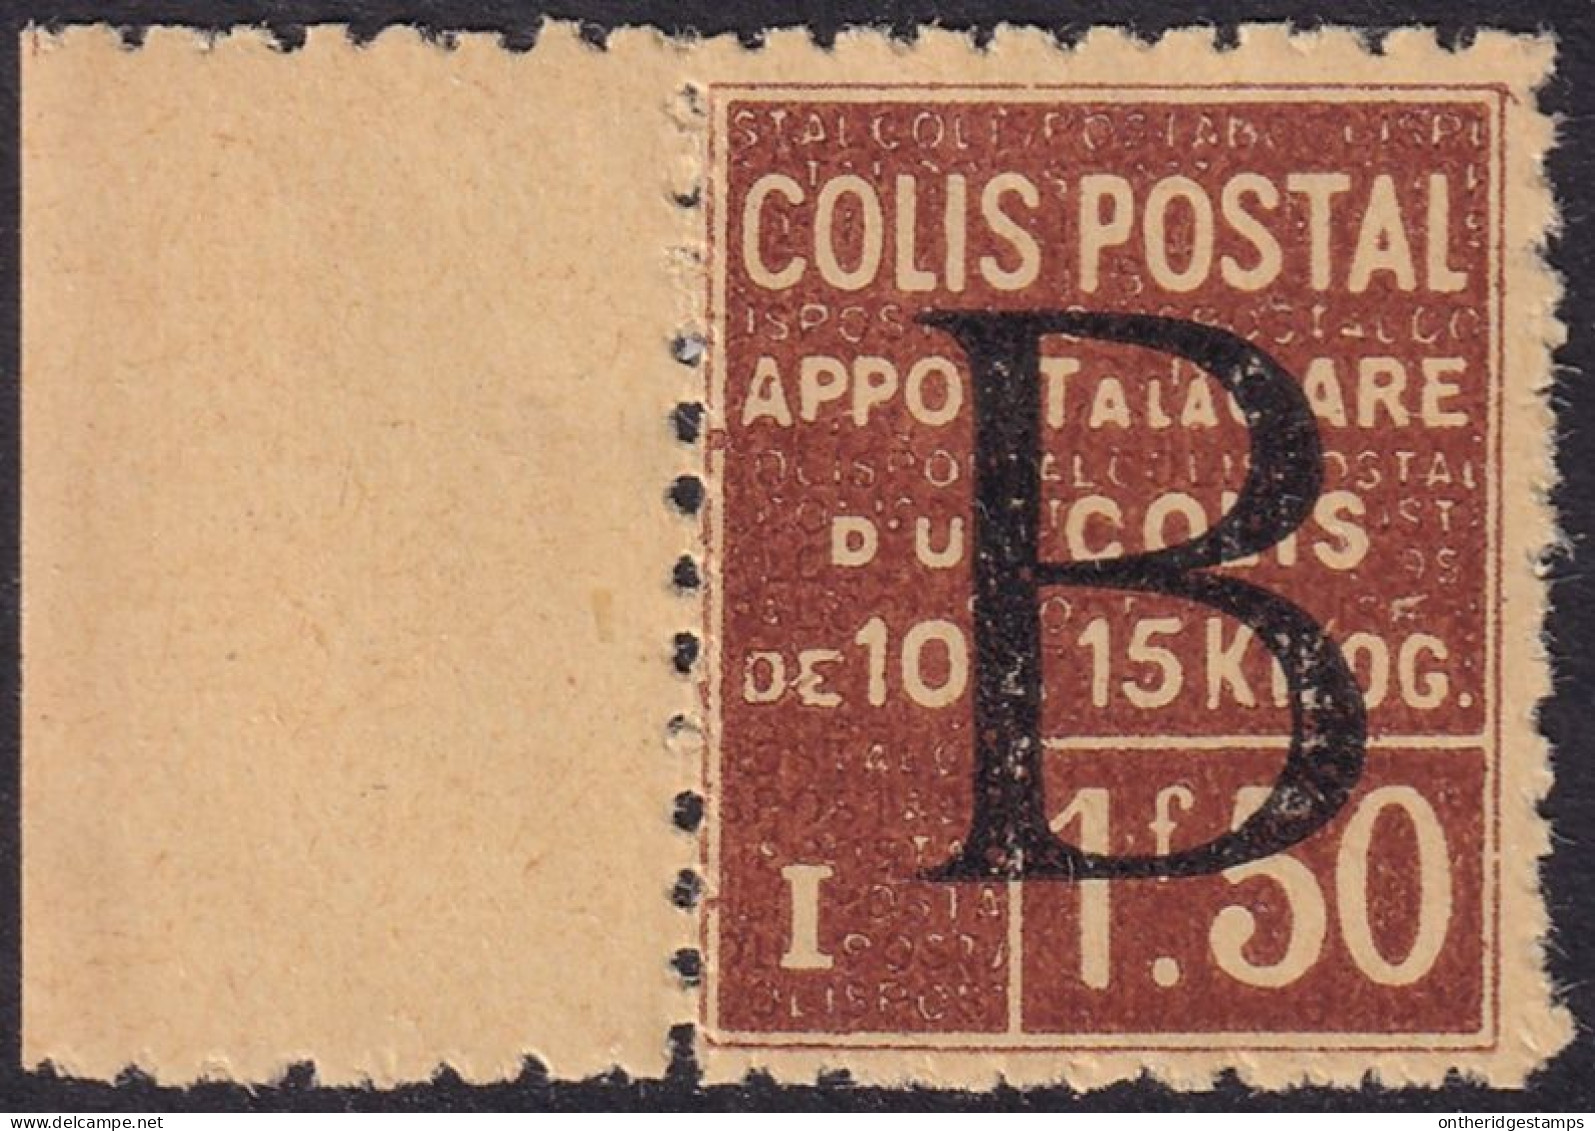 France 1936 Yt 102 Colis Postal Parcel Post MNH** "B" Overprint - Ongebruikt